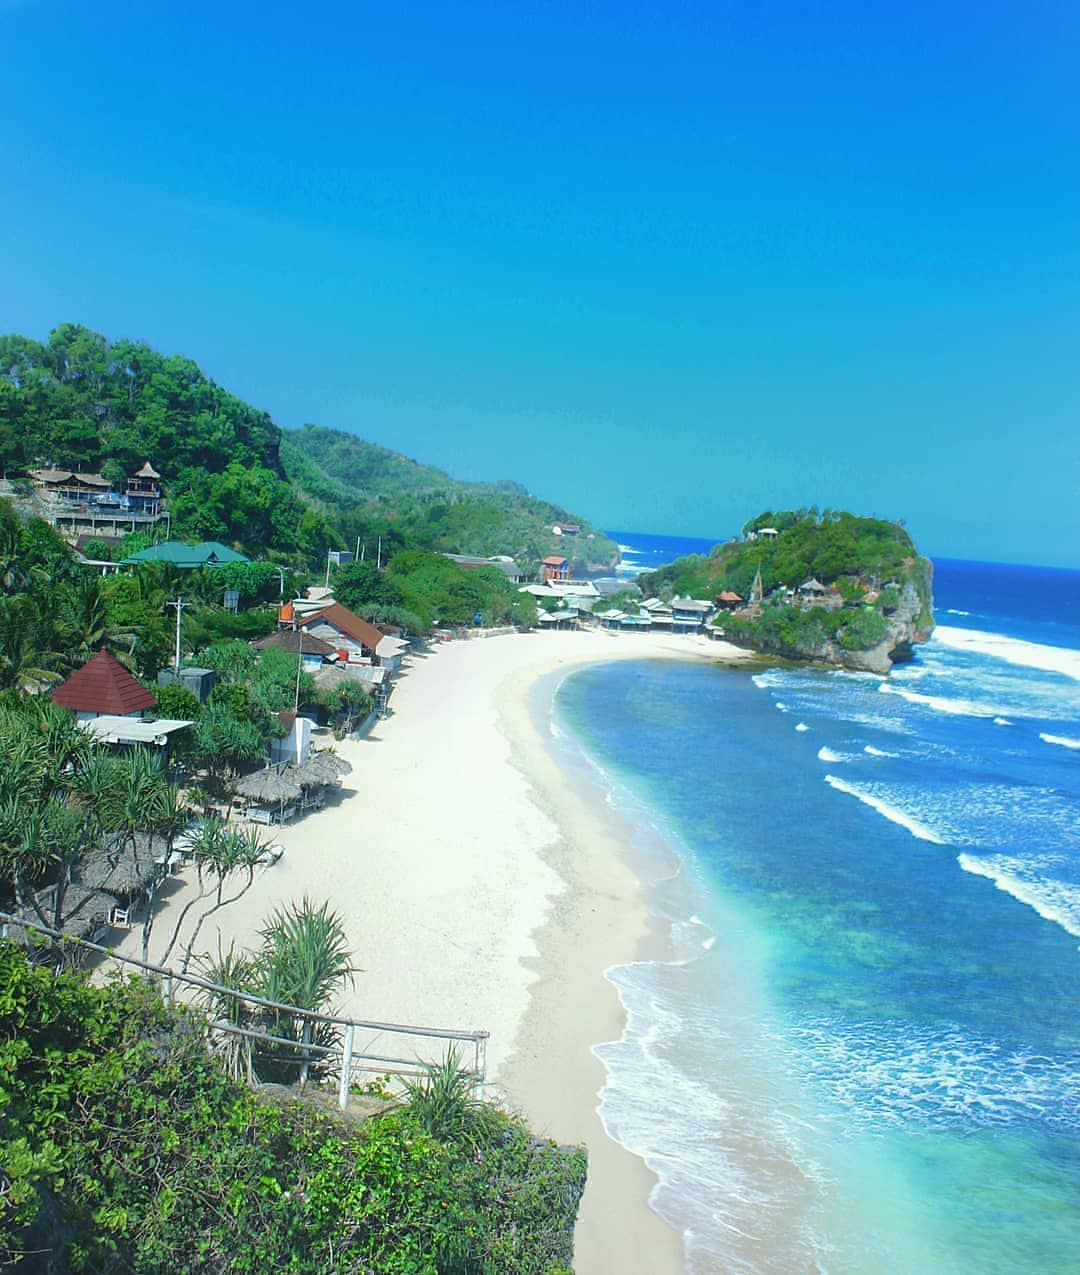 Tiket Masuk Pantai Indrayanti 7, Gambar dan Wisata Dekat Pantai